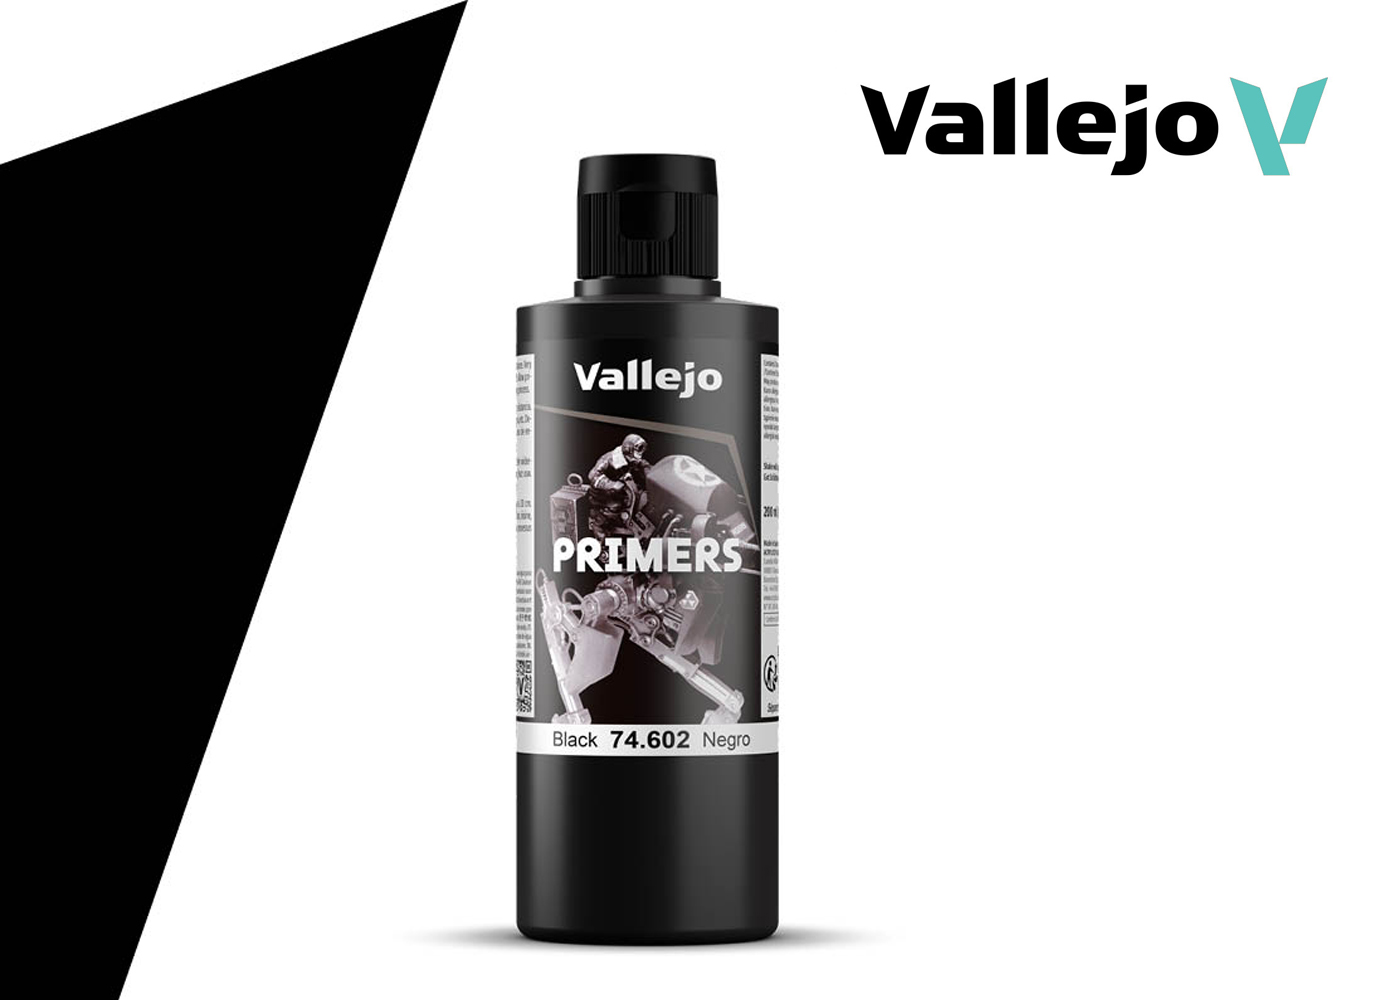 Vallejo Surface Primer: Gloss Black 200ml (74.660) – Gnomish Bazaar